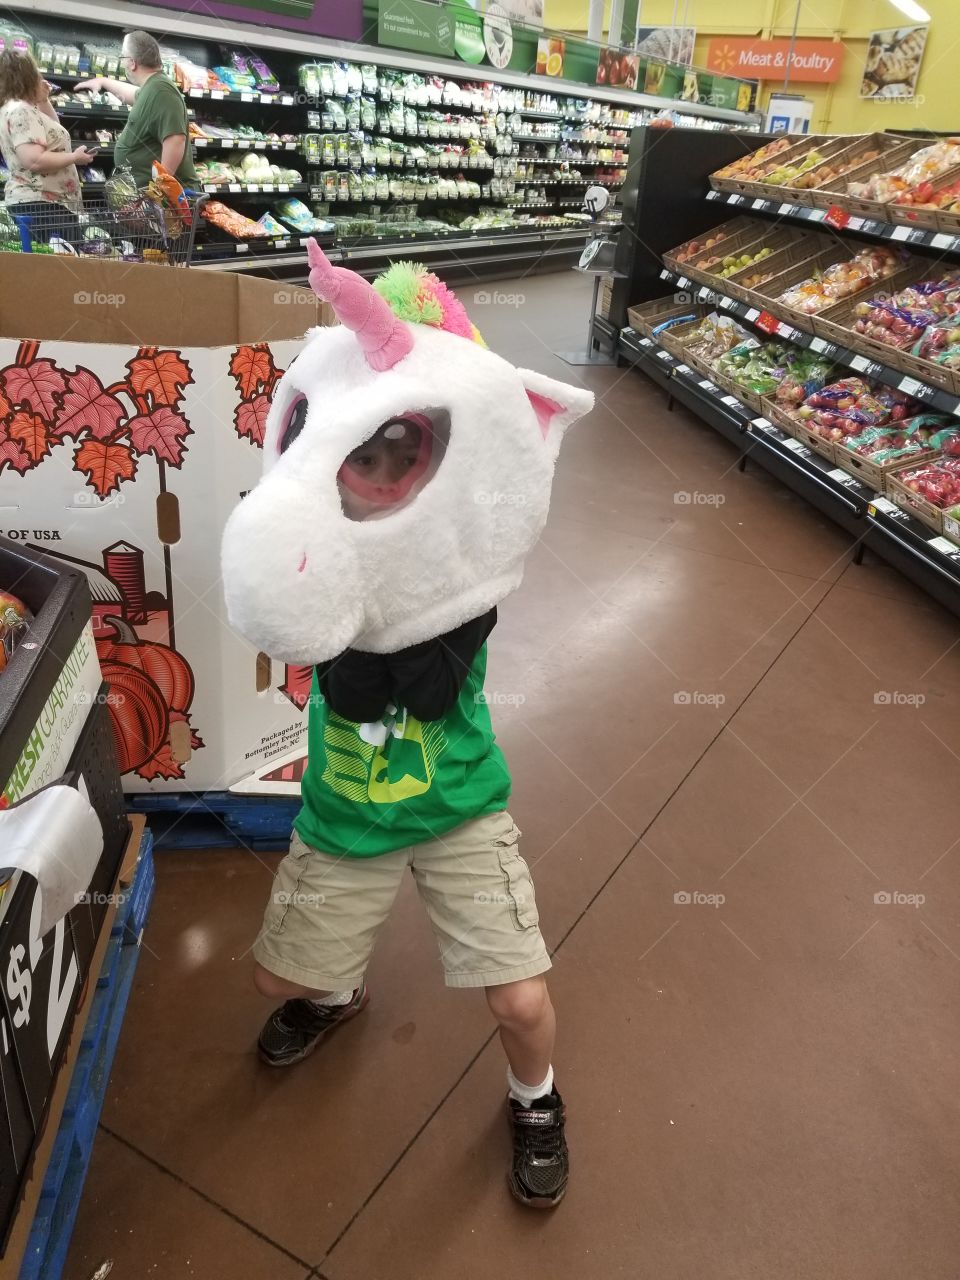 My Son in Unicorn Head